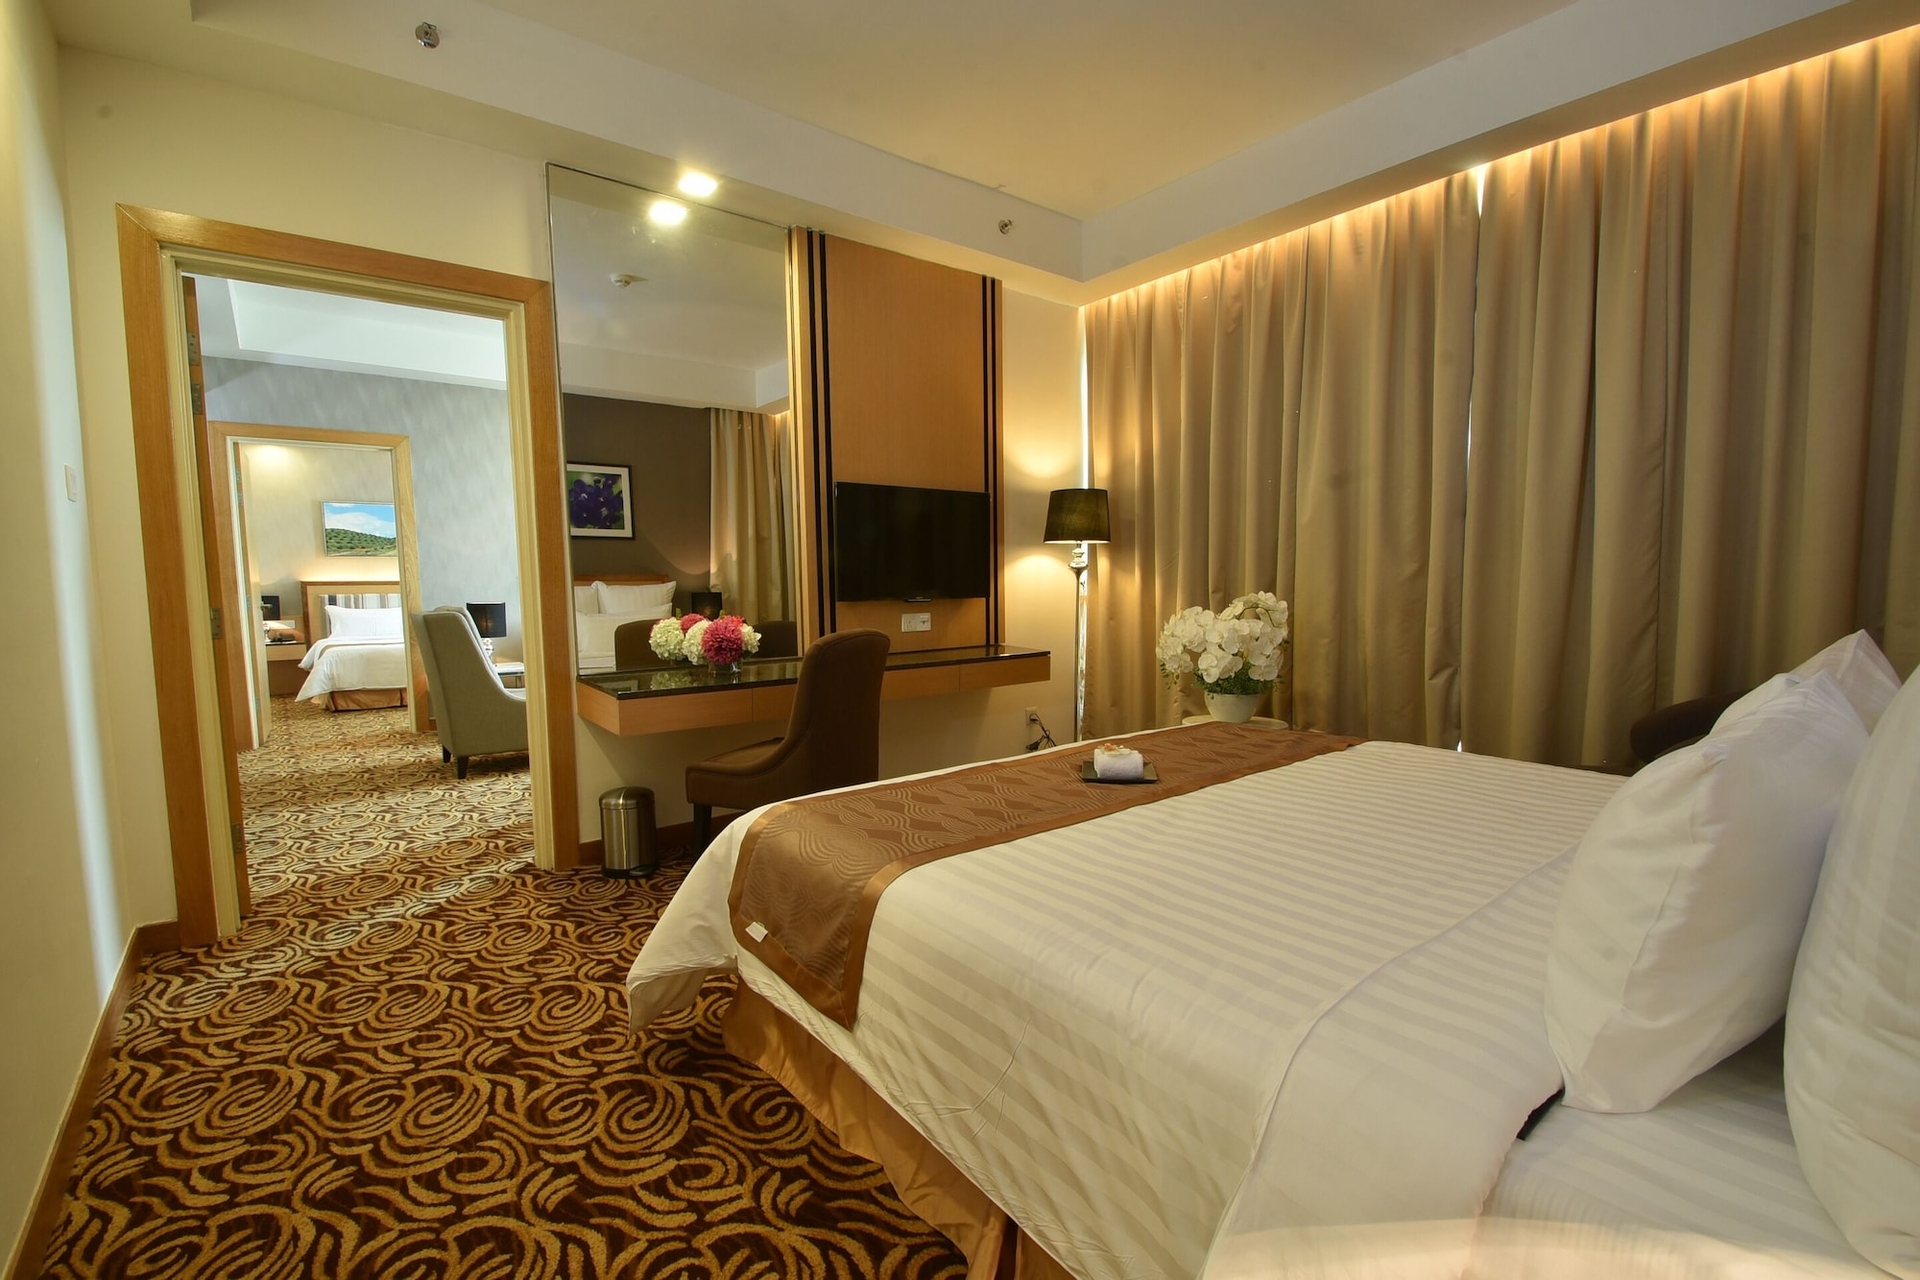 Bedroom 3, Hotel Tenera, Hulu Langat